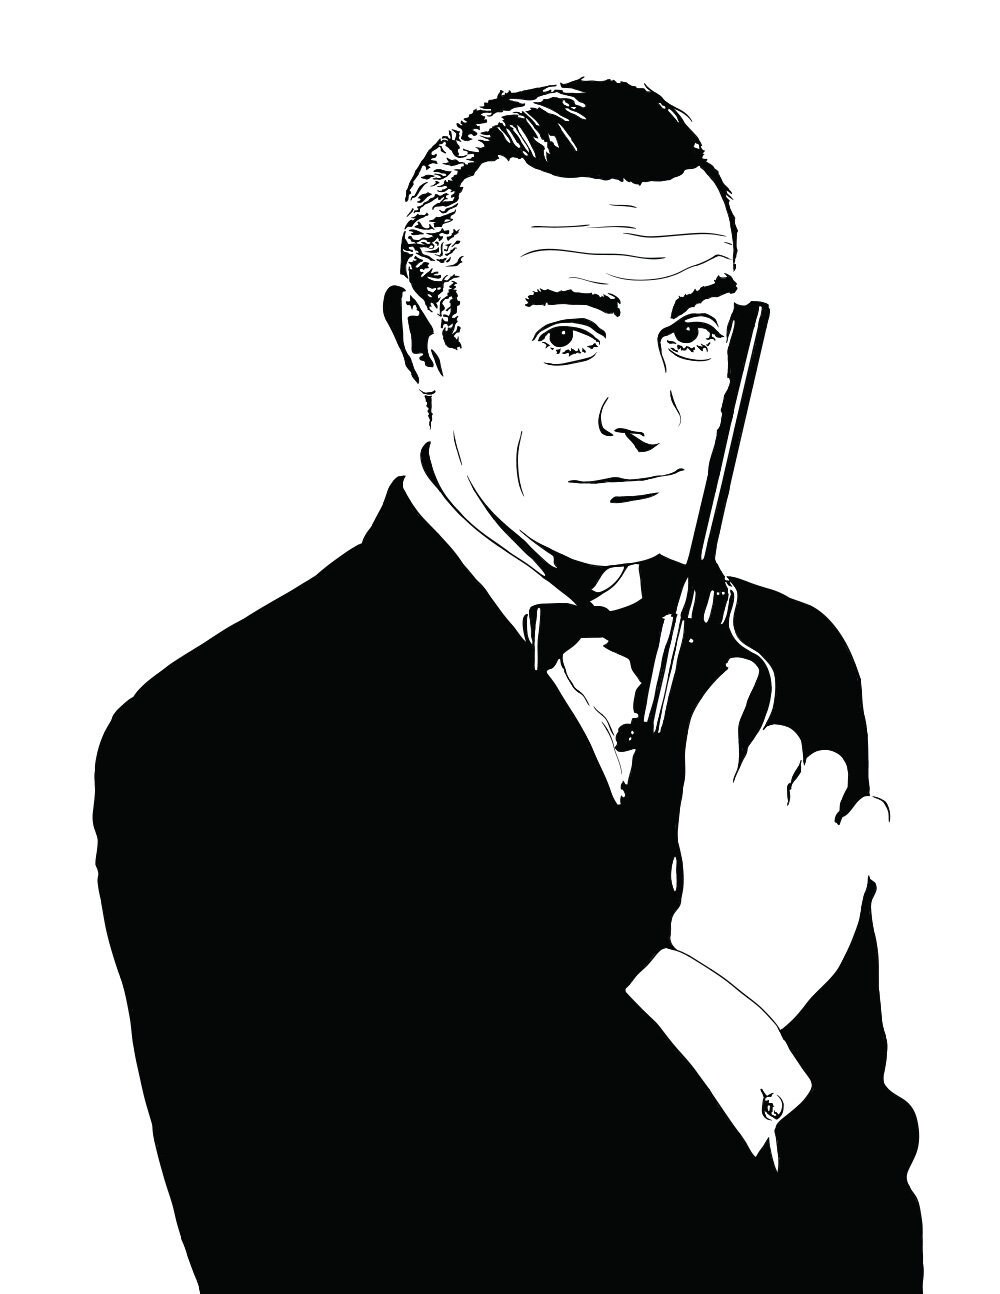 Sean Connery as James Bond Art Print Illustration of Suavest | Etsy